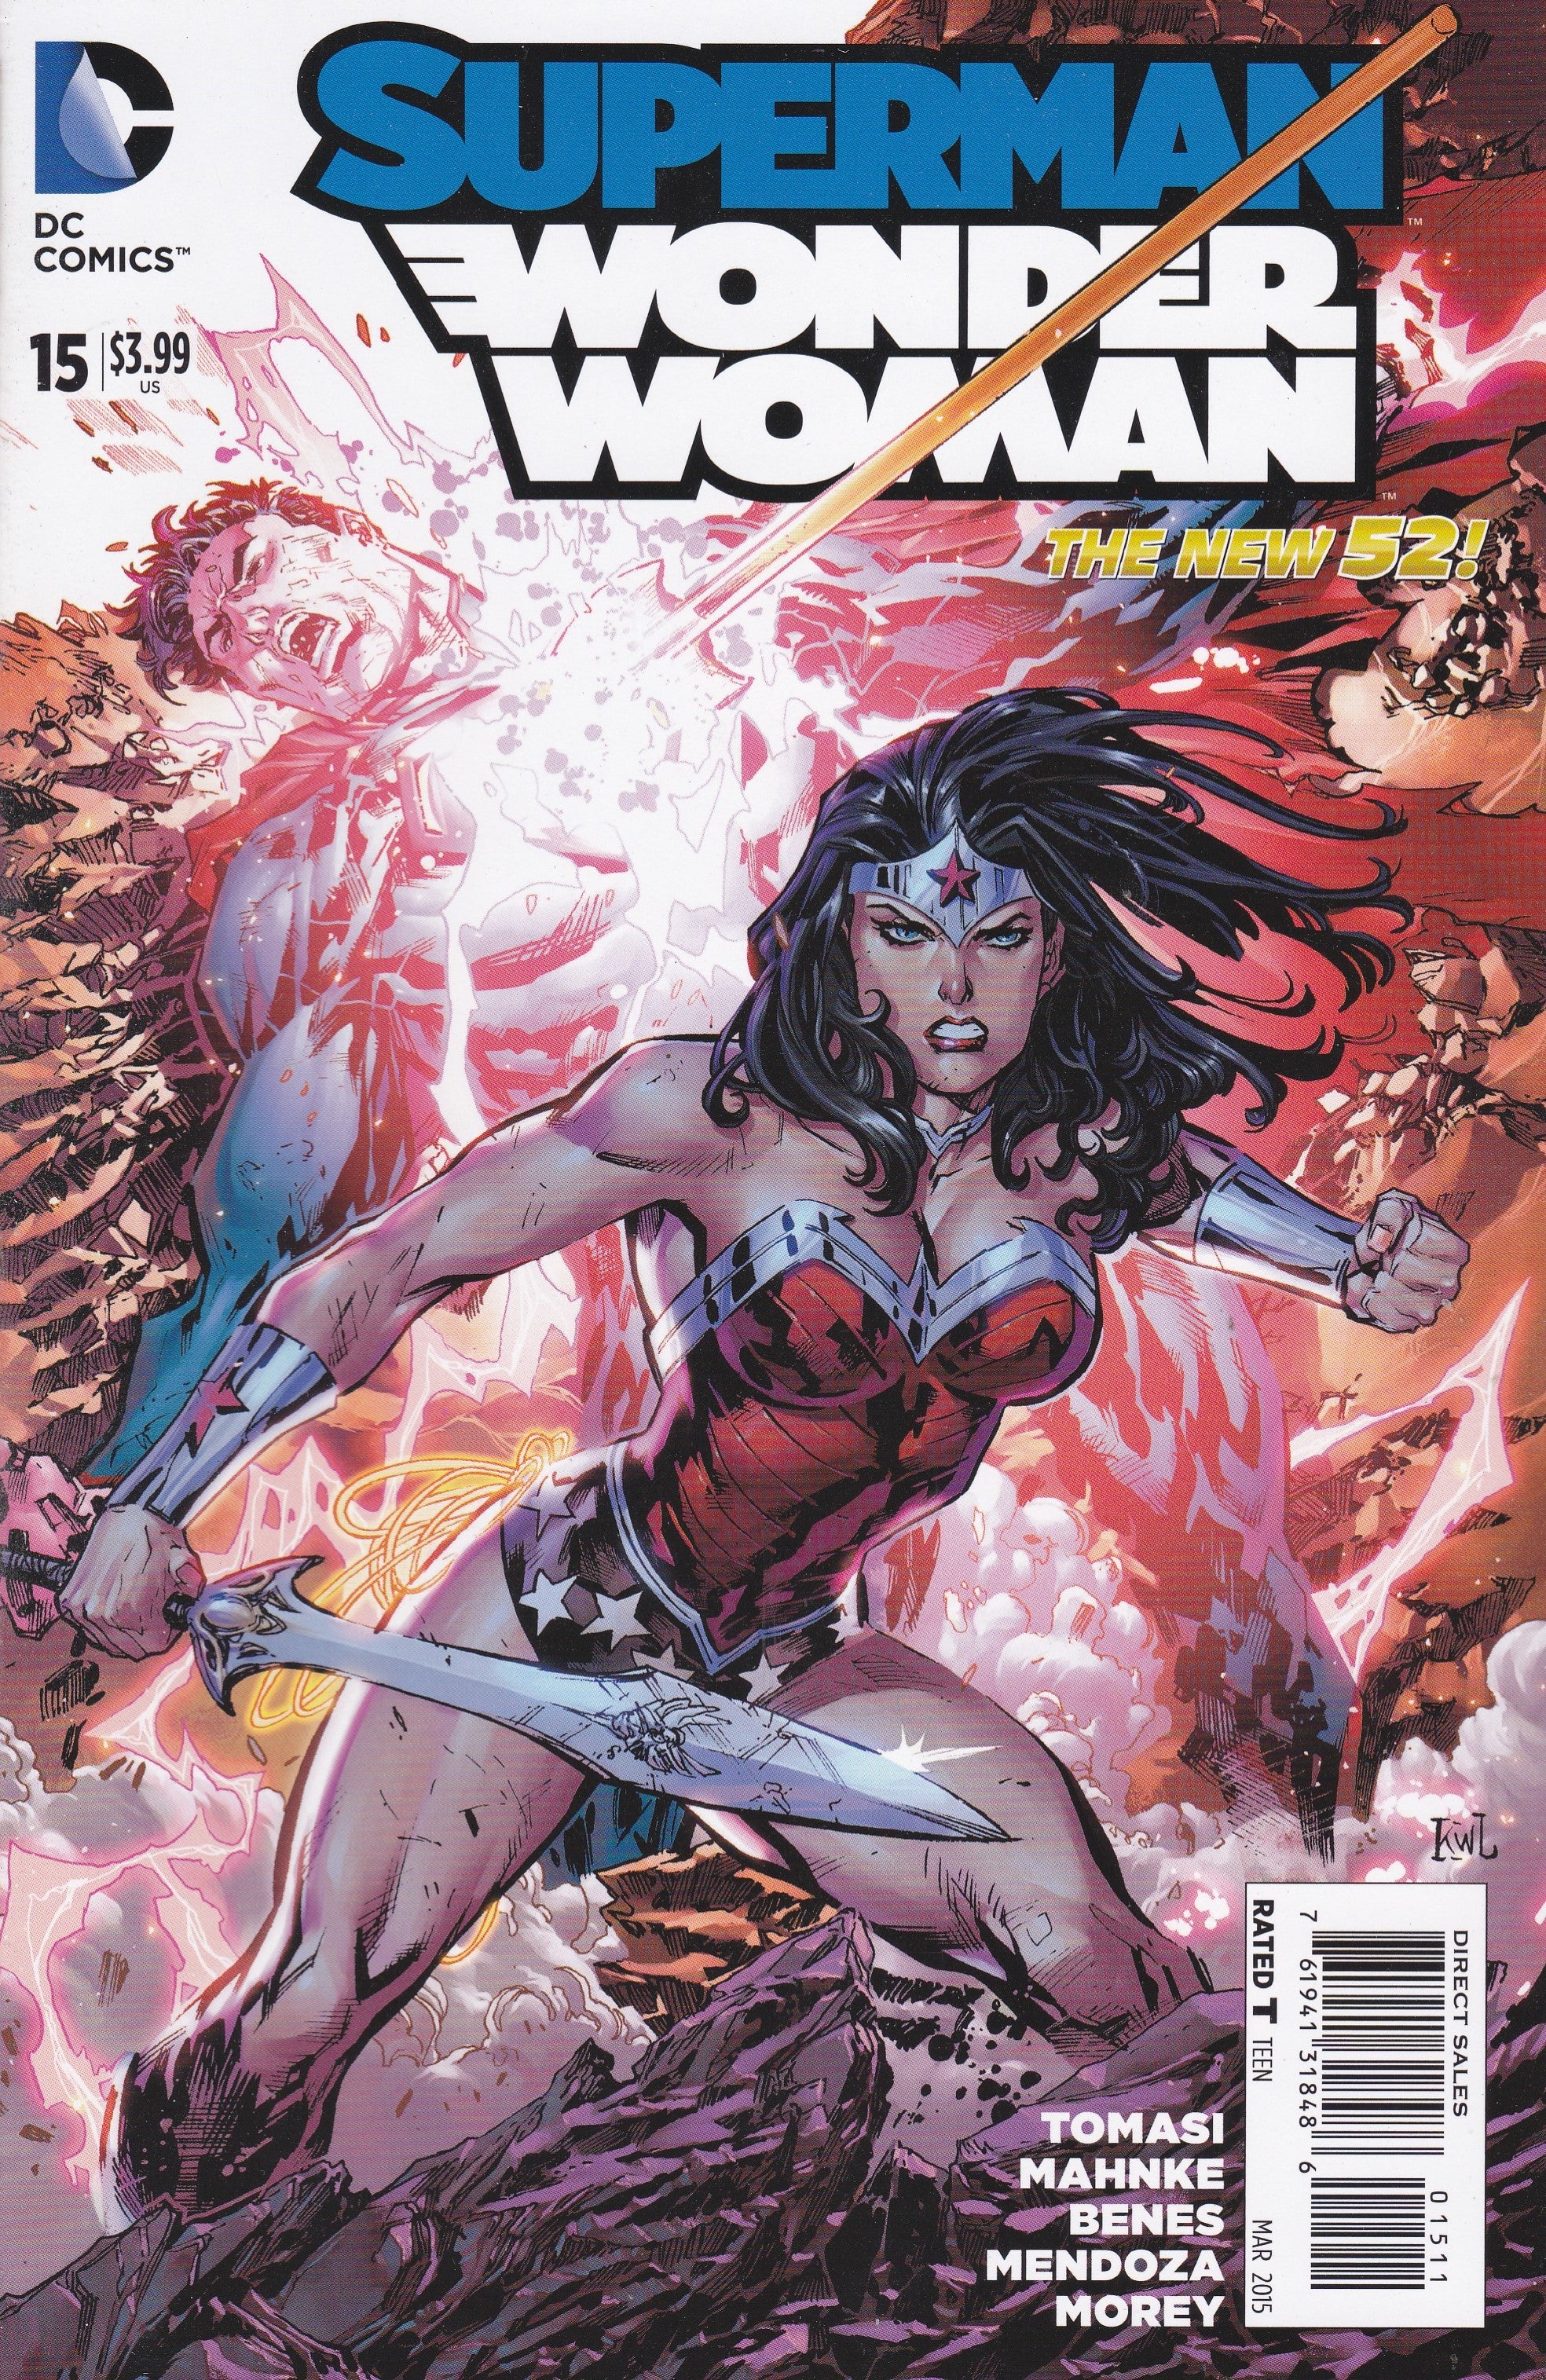 Wonder Woman Vol 3 25, DC Database